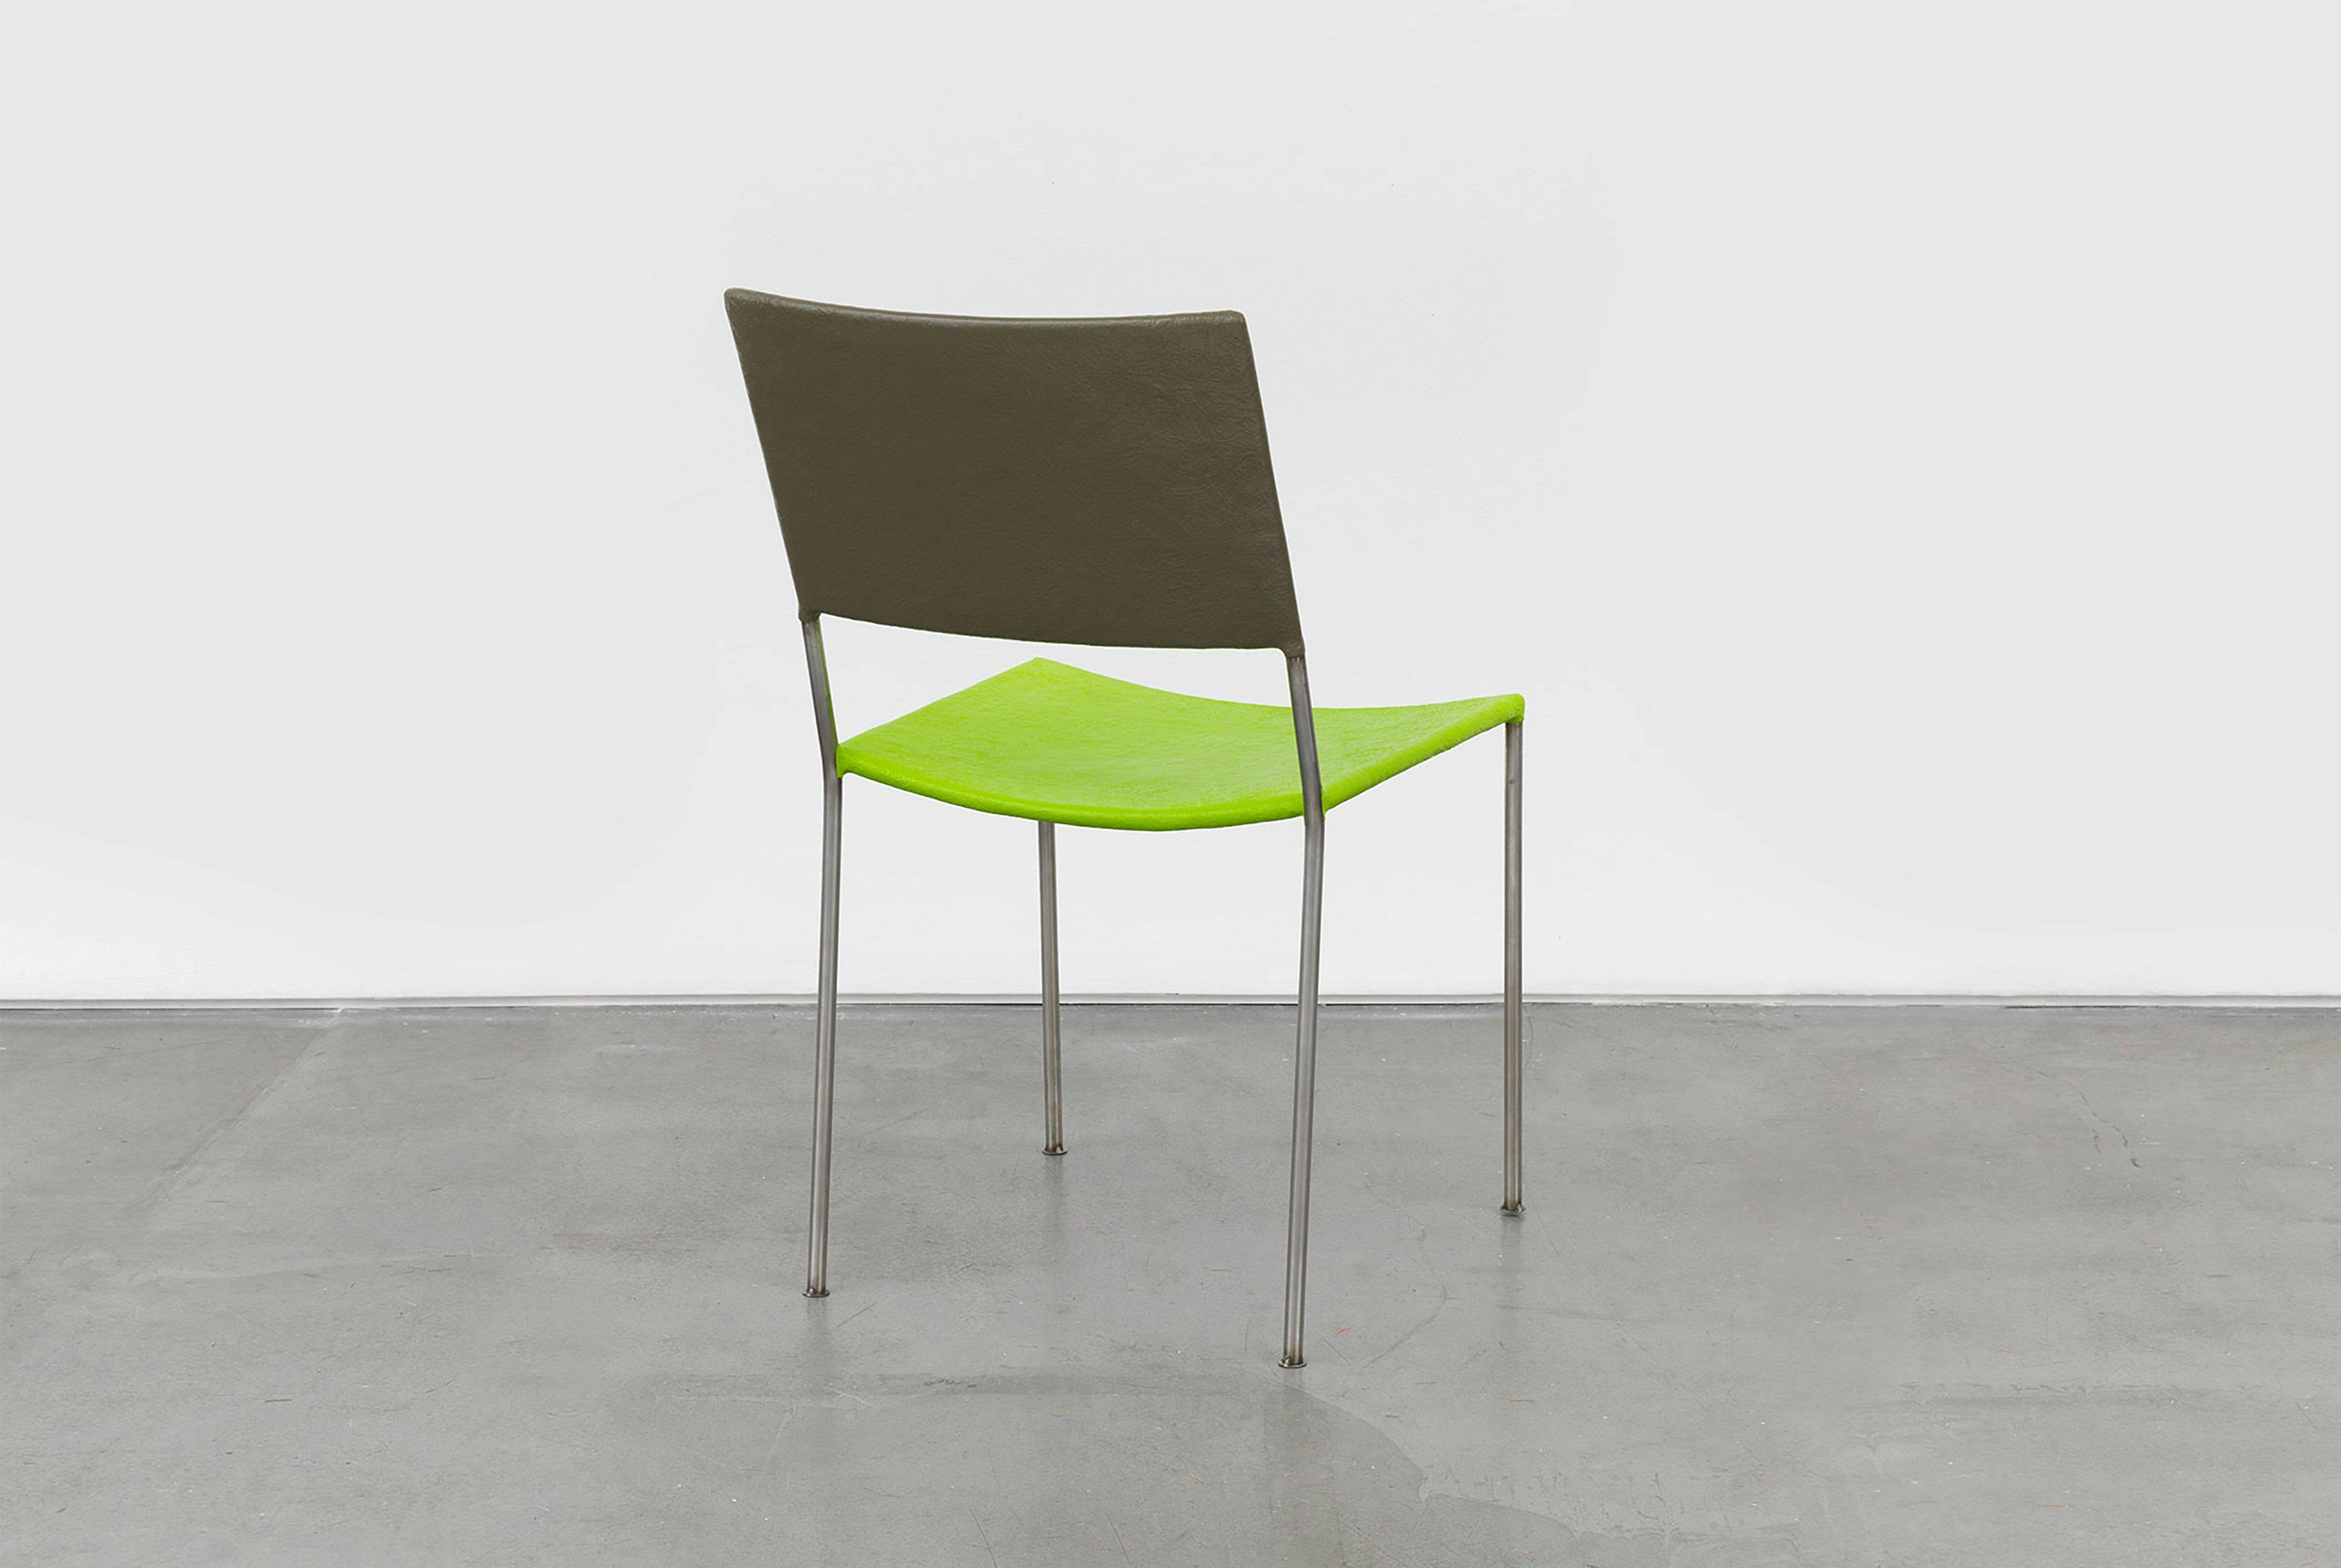 A furniture work by Franz West, titled K√ºnstlerstuhl (Artist's Chair), dated 2006/2015